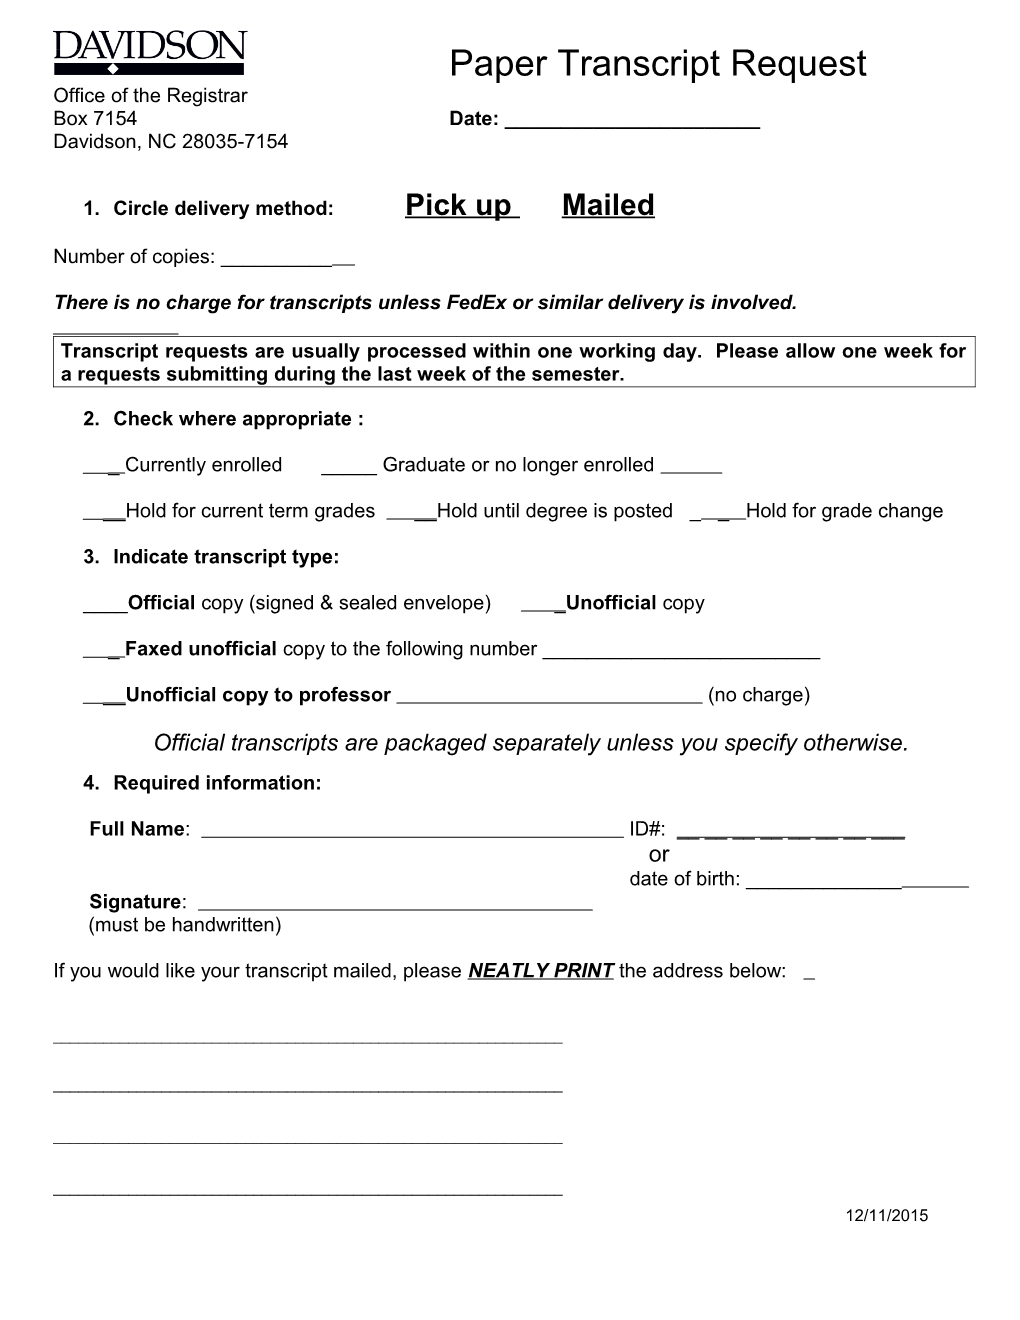 Transcript Request Form s3